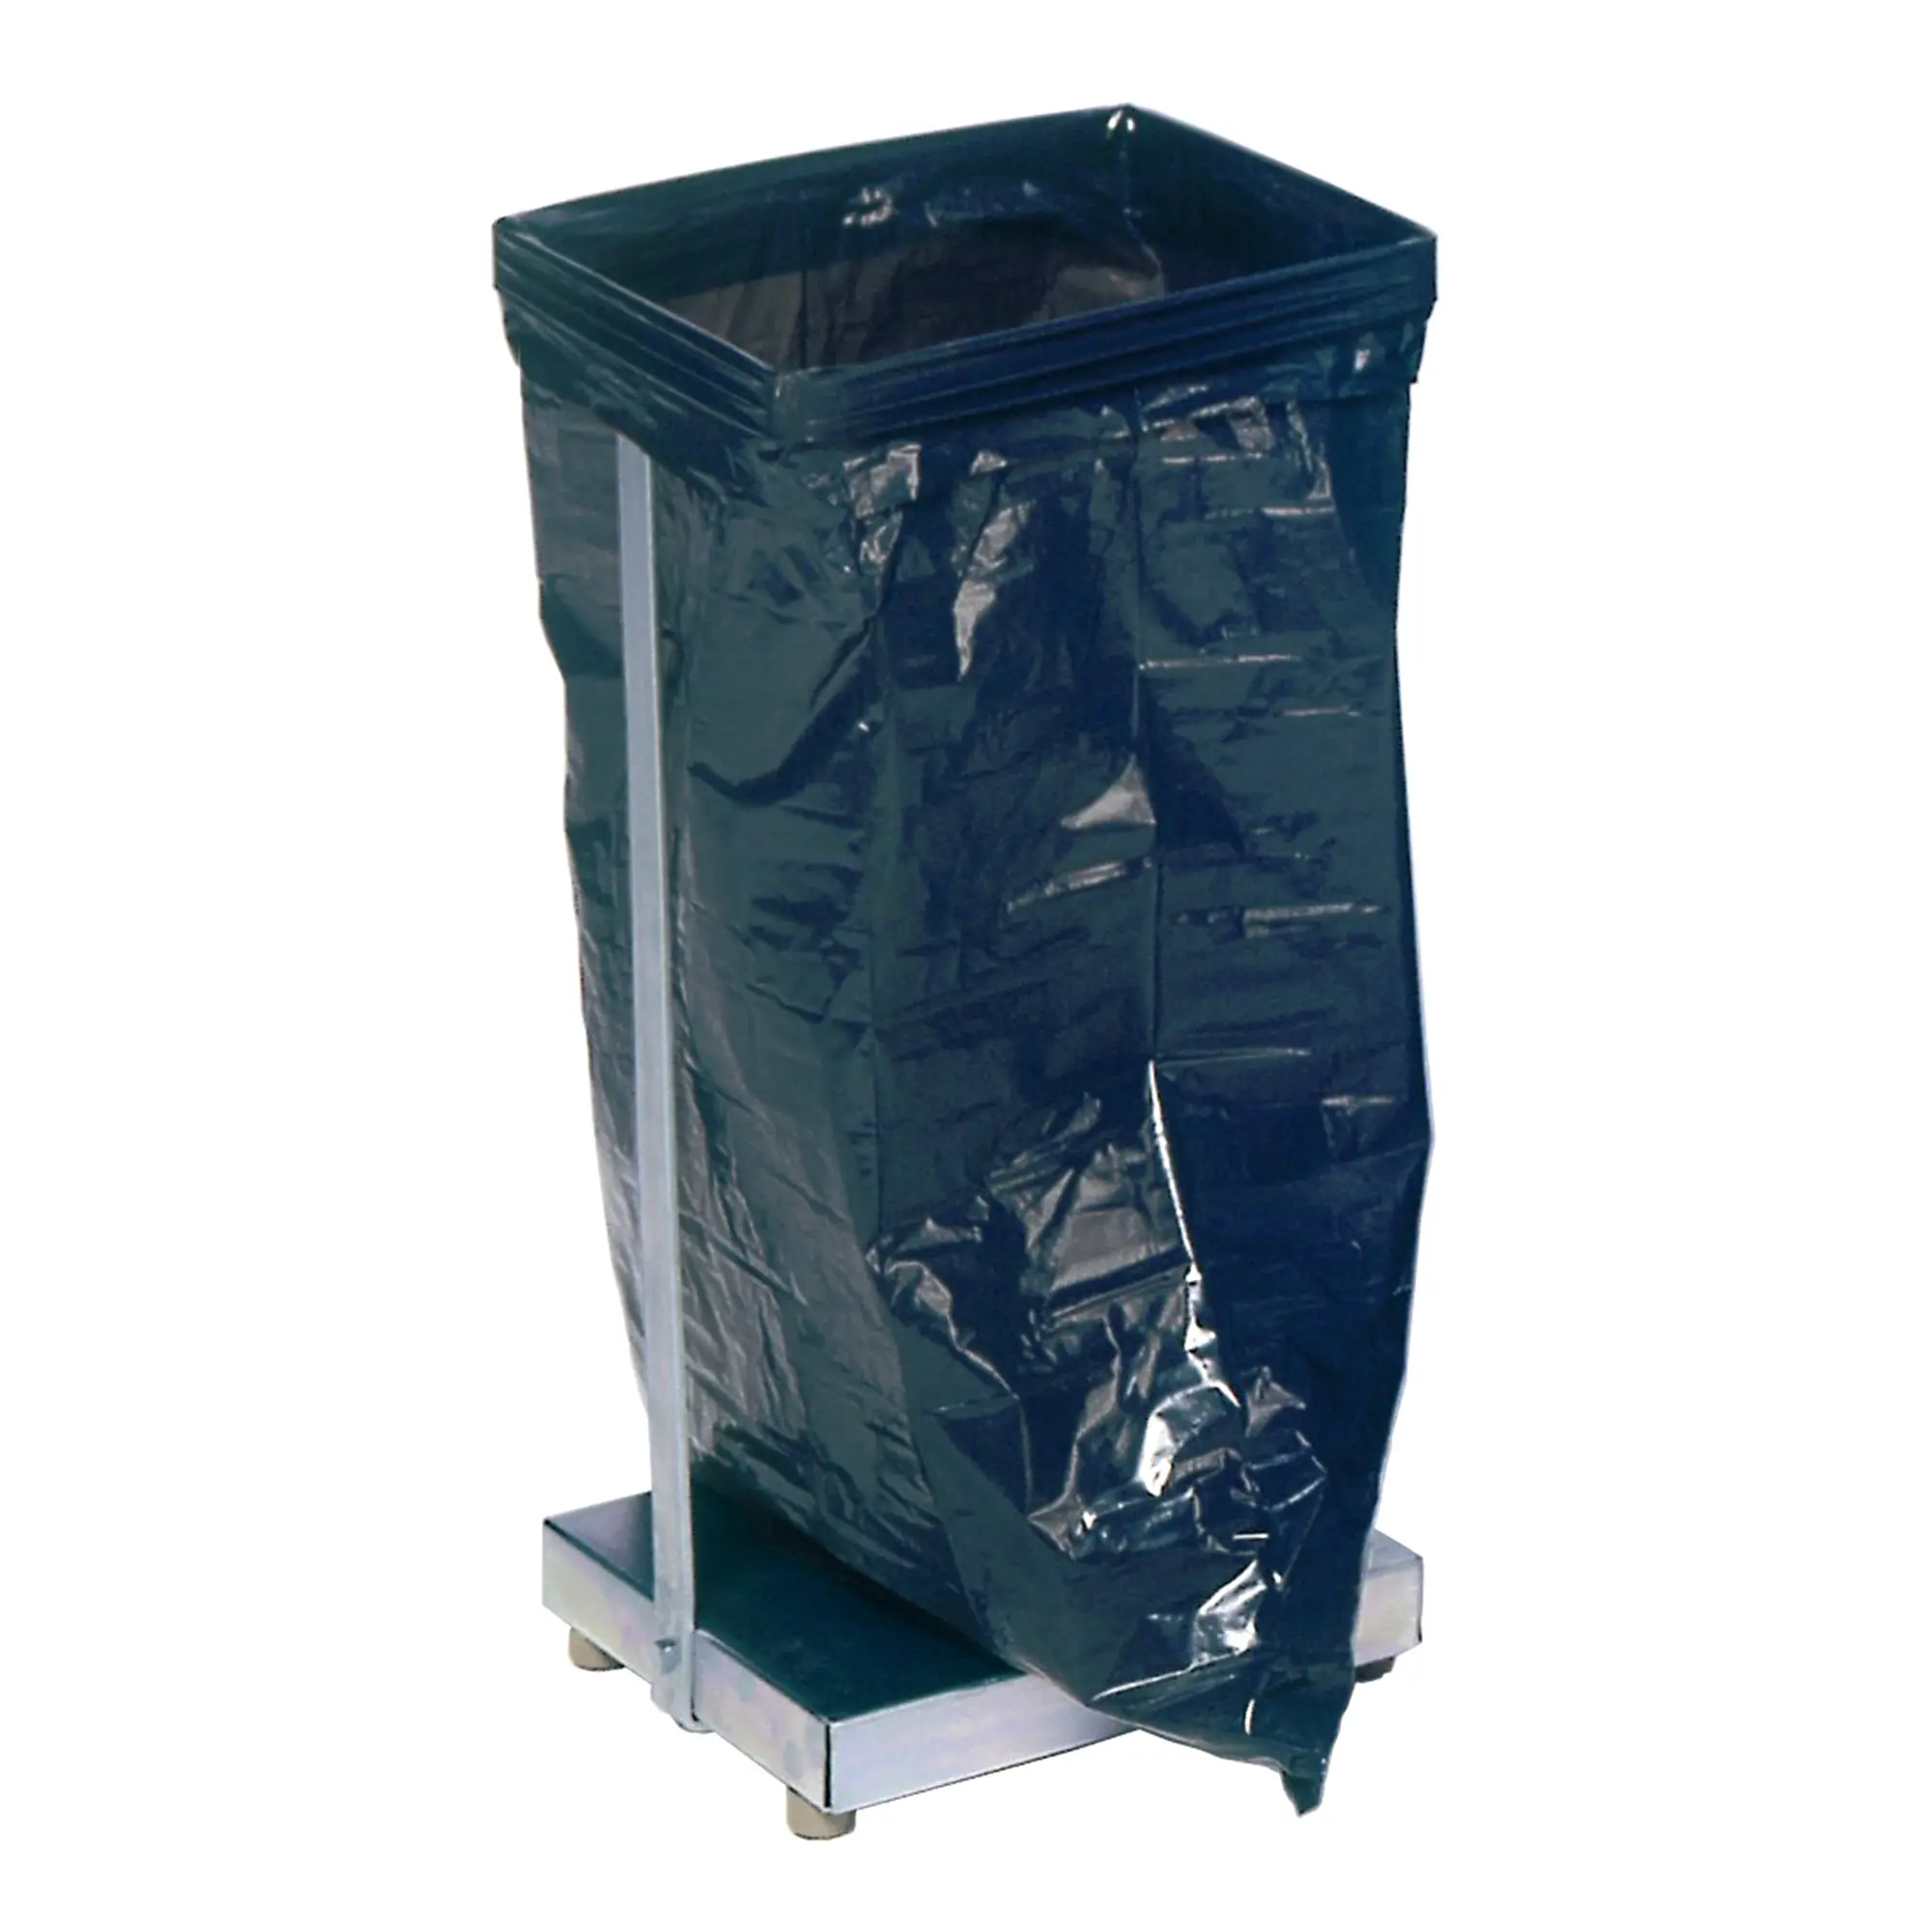 VAR Abfallsammler Typ SHR 60, verzinkt, fahrbar, 60-70 Liter freistehender Müllsackständer 3601